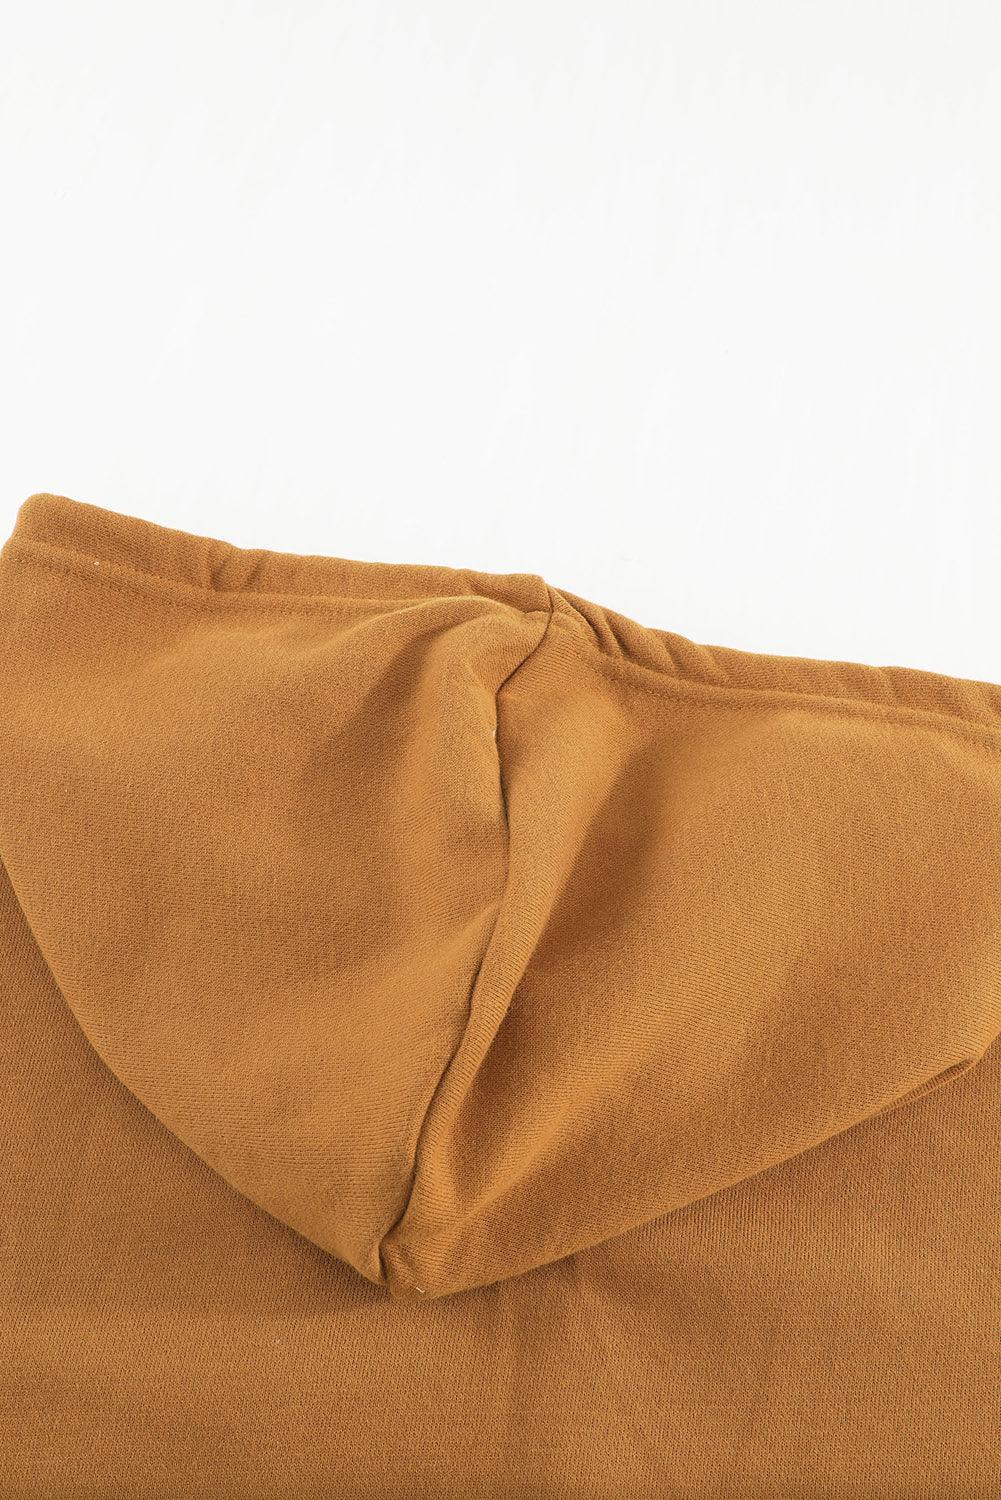 Yellow Zip-Up Pocket Drawstring Hoodie Jacket - L & M Kee, LLC